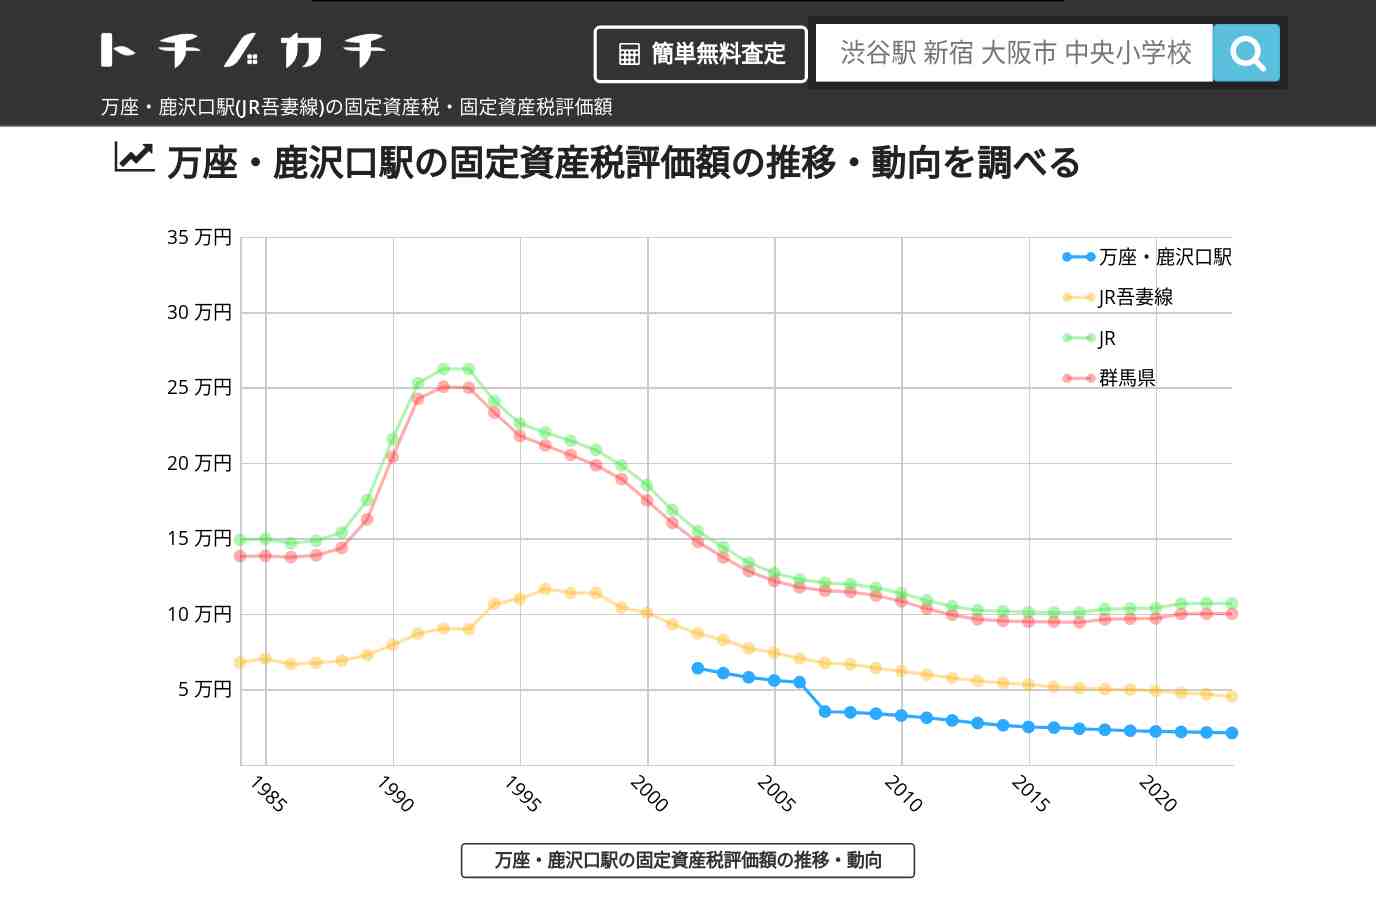 万座・鹿沢口駅(JR吾妻線)の固定資産税・固定資産税評価額 | トチノカチ